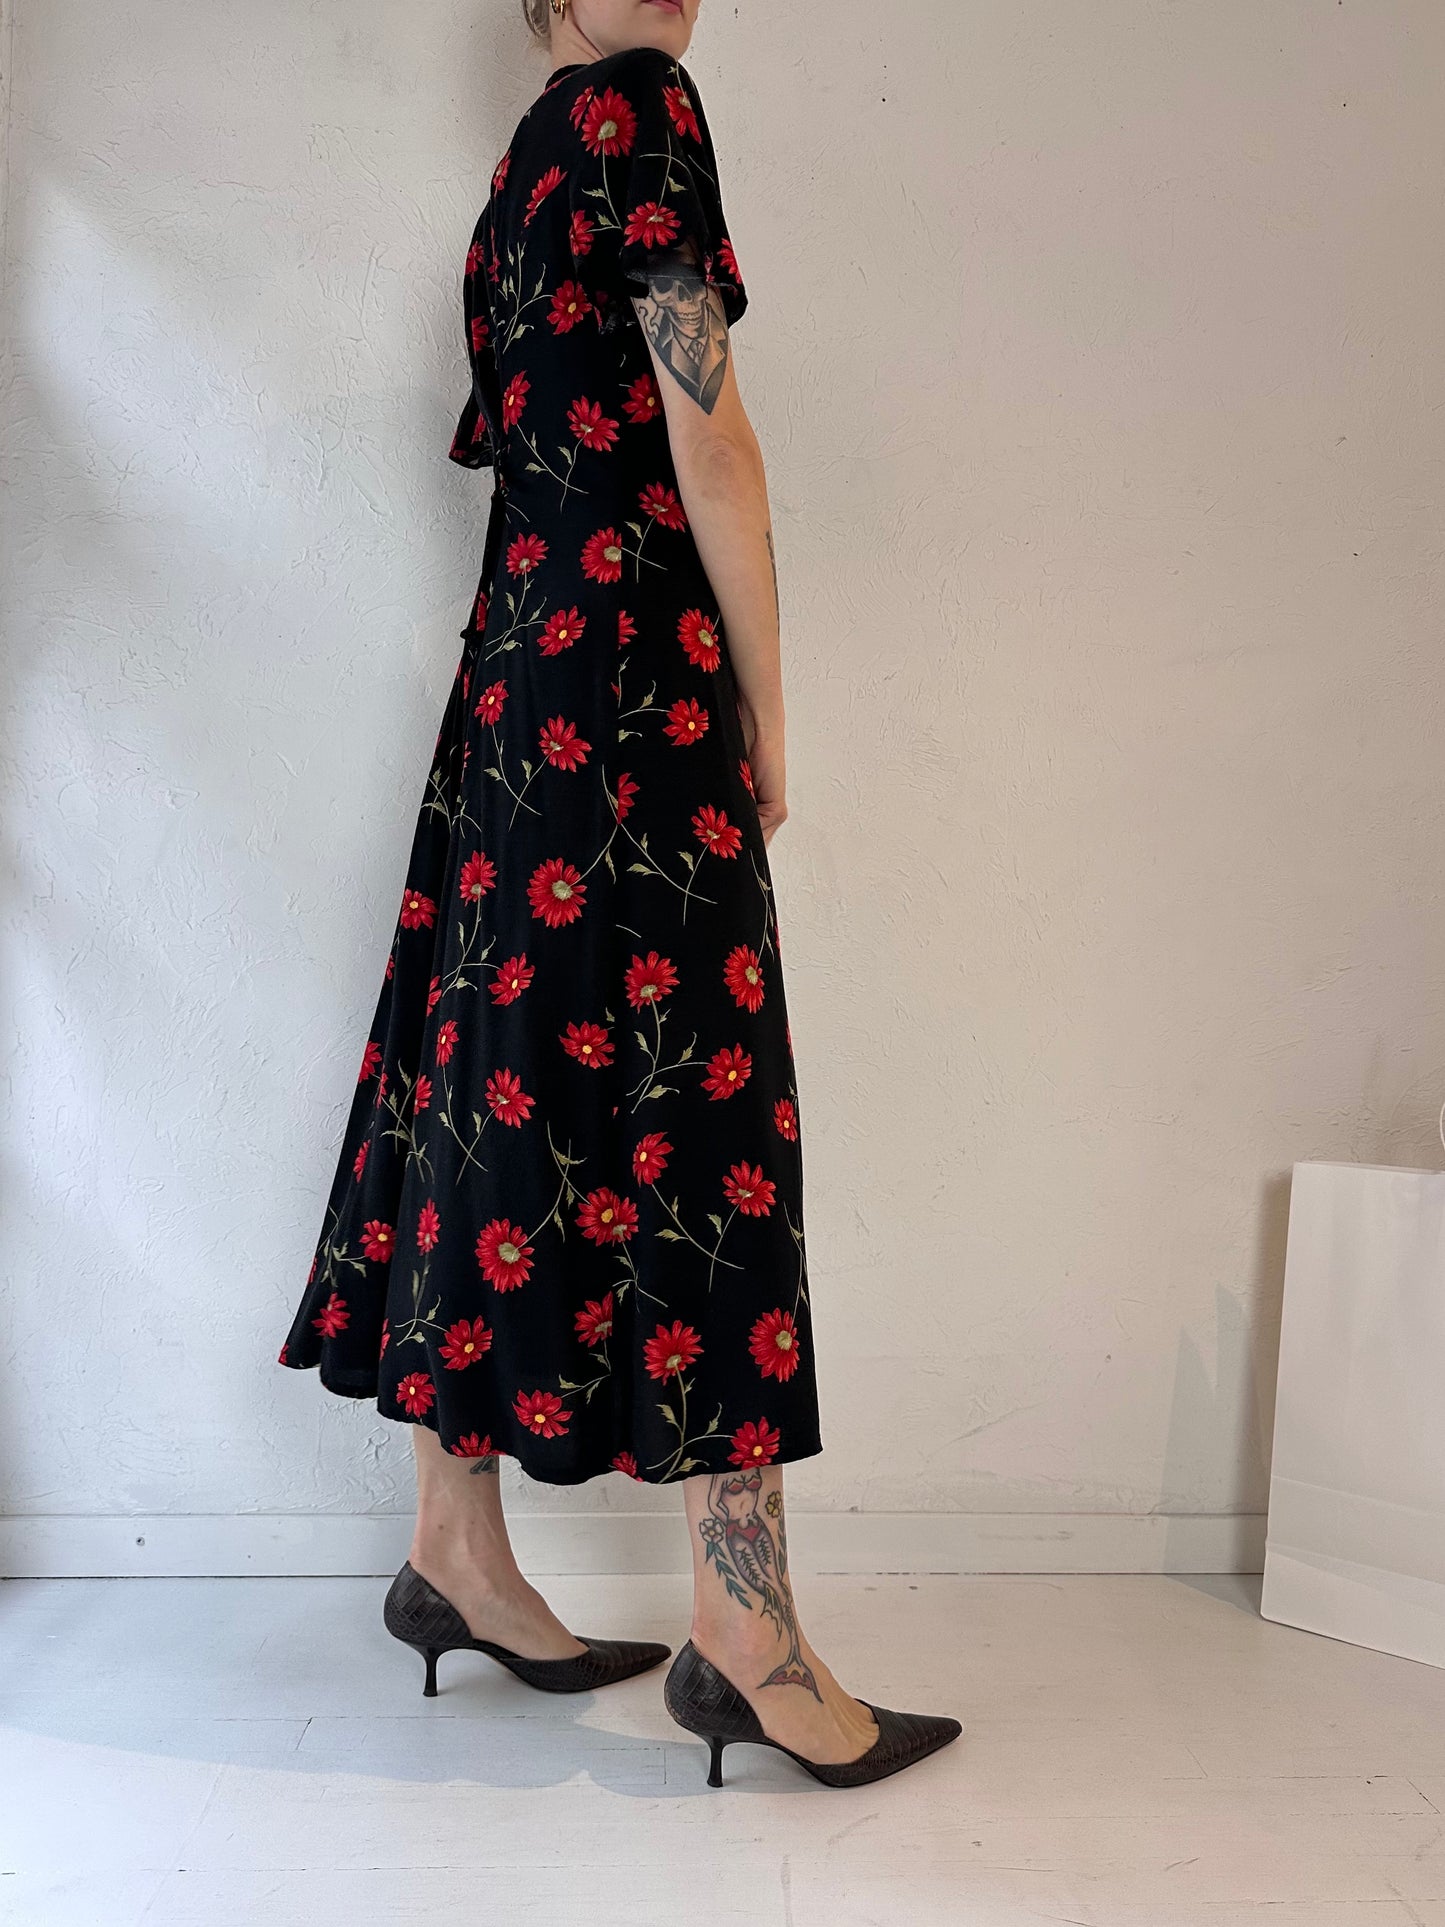 90s 'Jessica' Black Floral Print Rayon Dress / Small - Medium